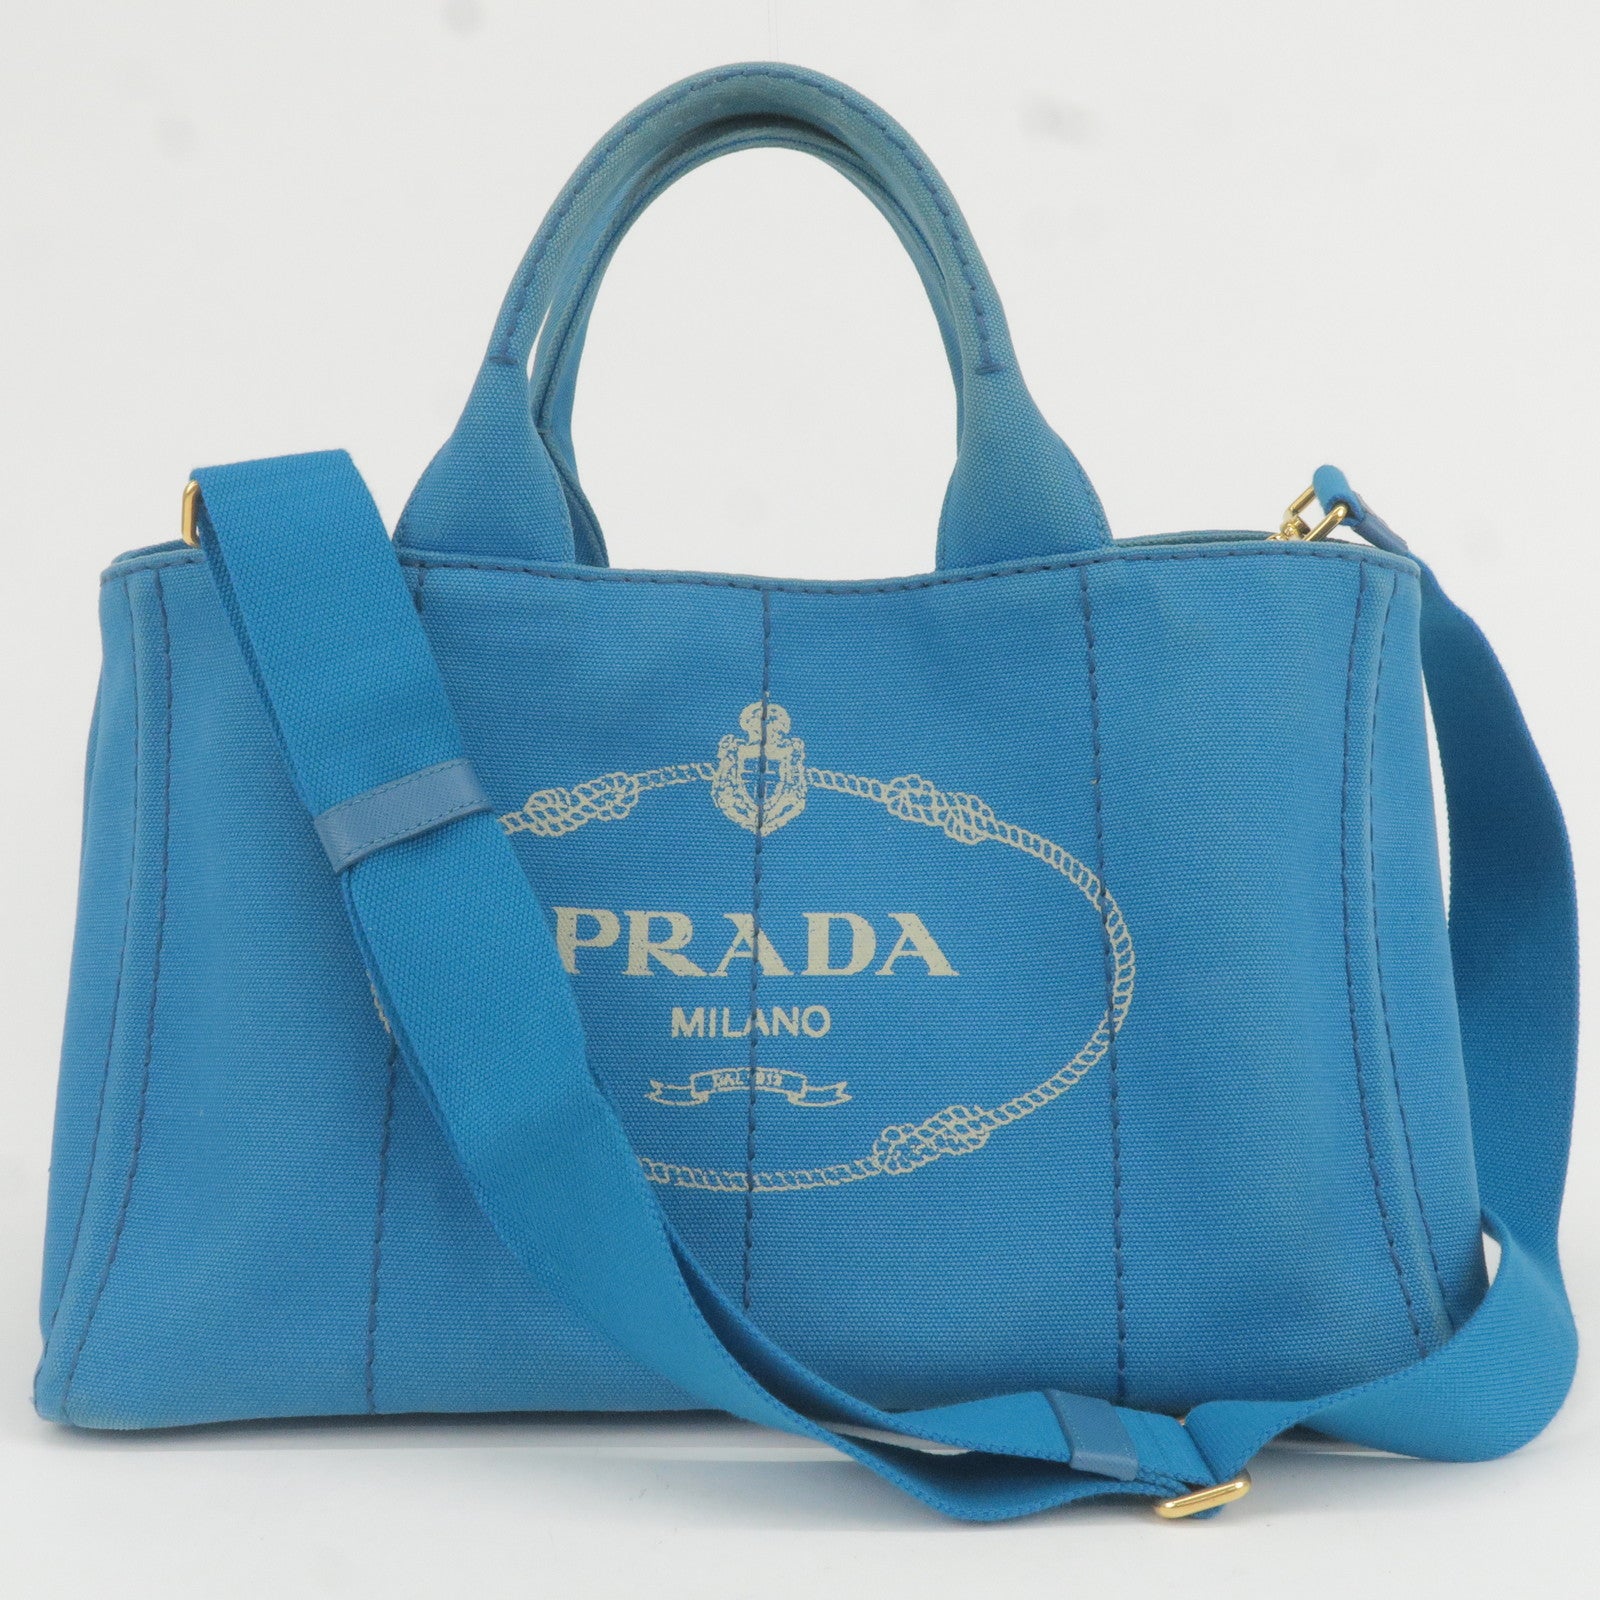 Prada Women's Supernova Brushed Tote Bag